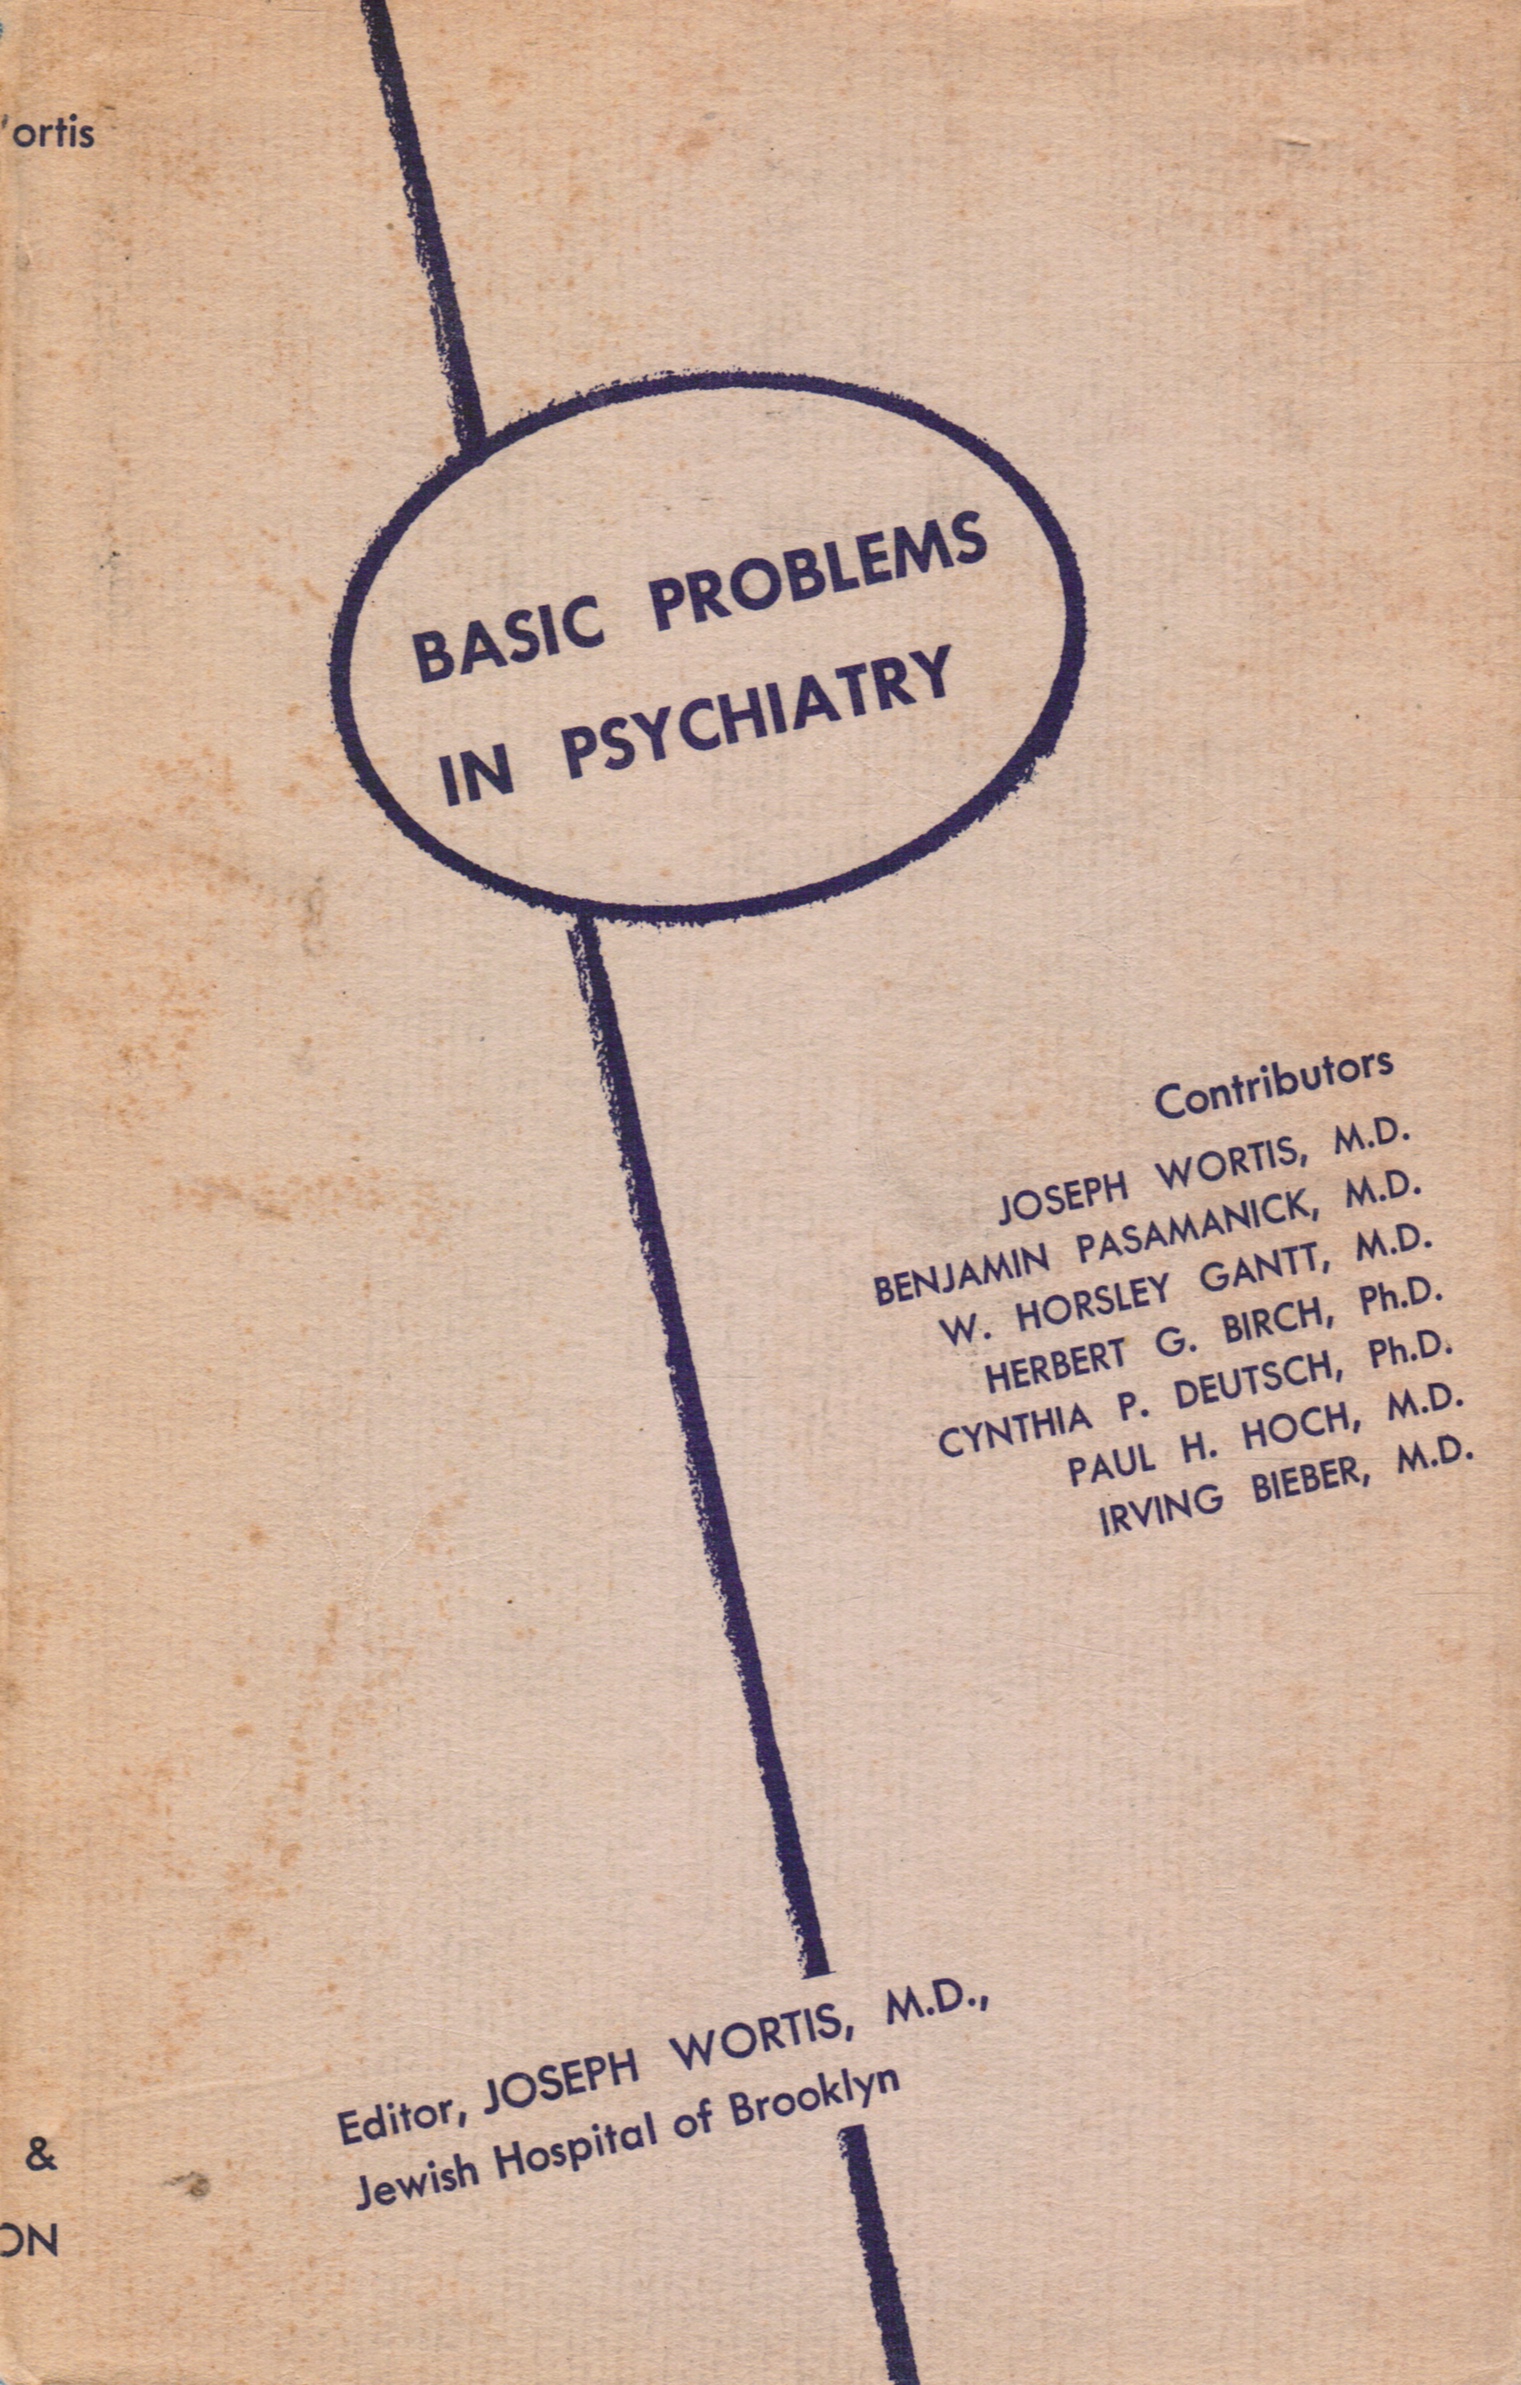 WORTIS, JOSEPH - Basic Problems in Psychiatry